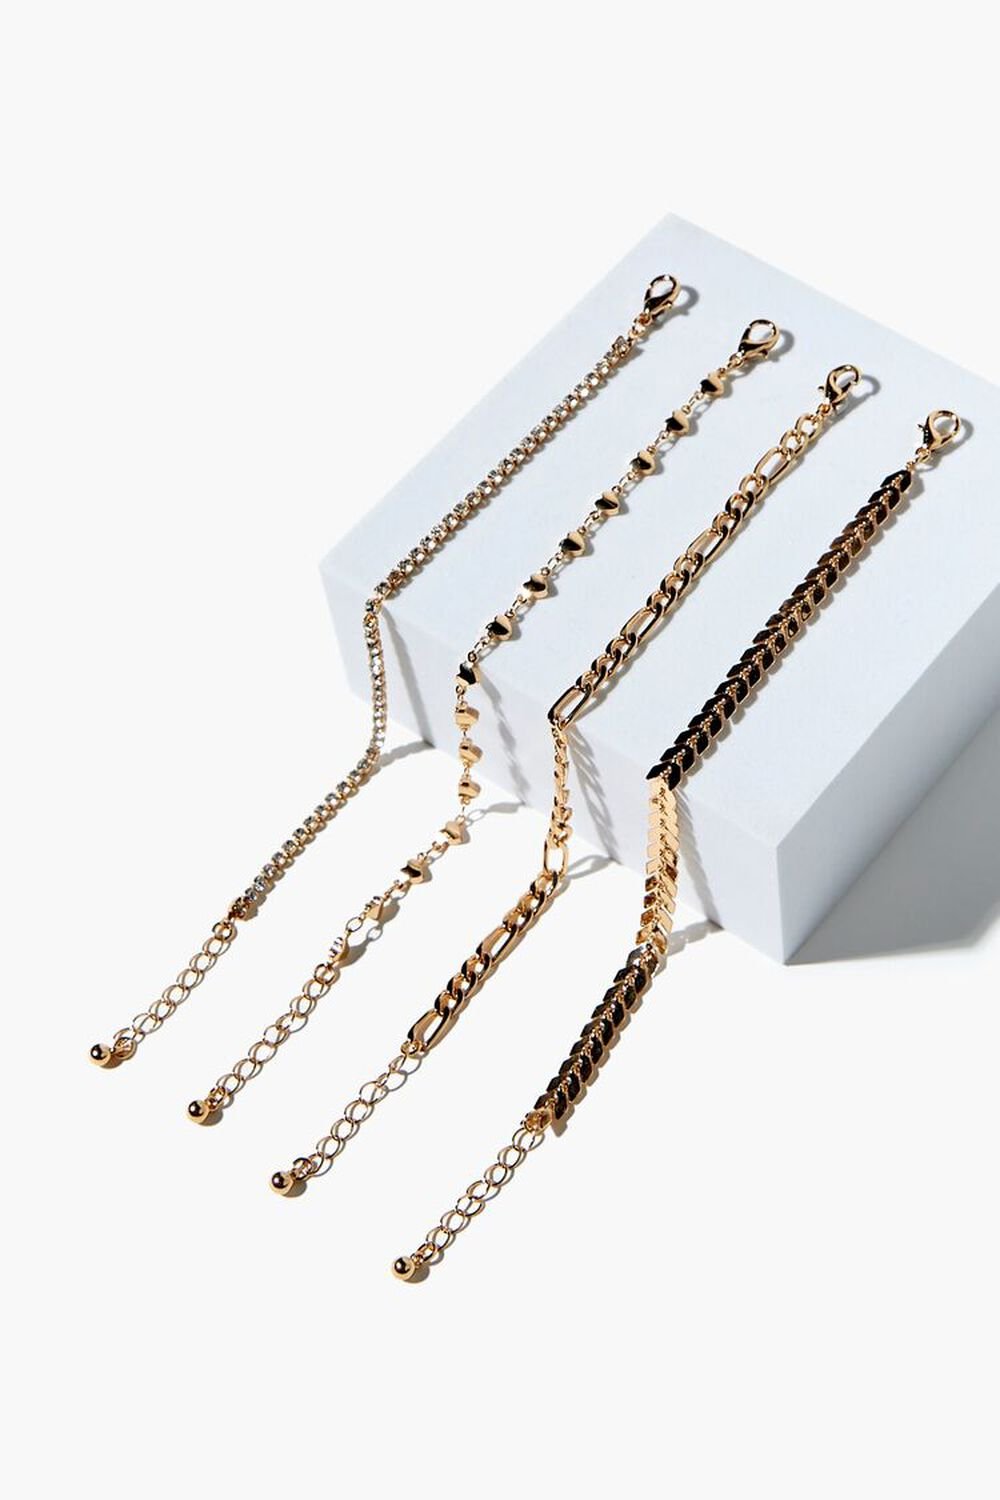 GOLD Assorted Chain Bracelet Set, image 1